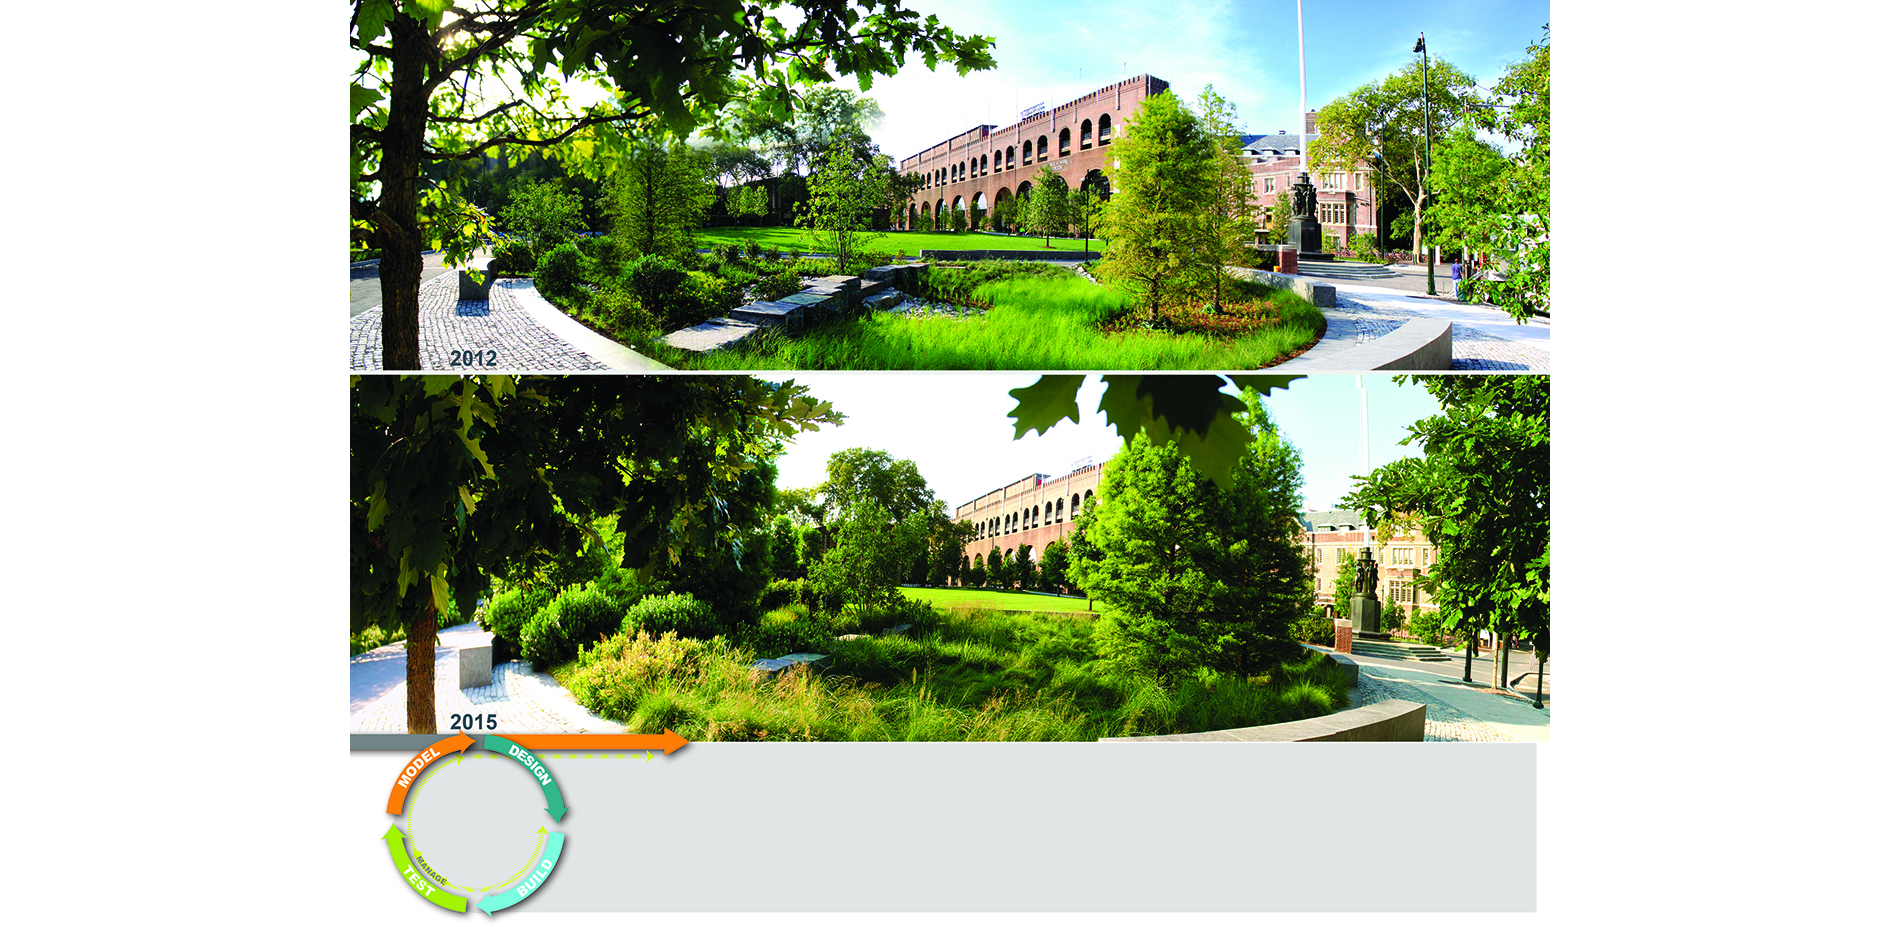 University of Pennsylvania 2012 and 2015 Site Photos